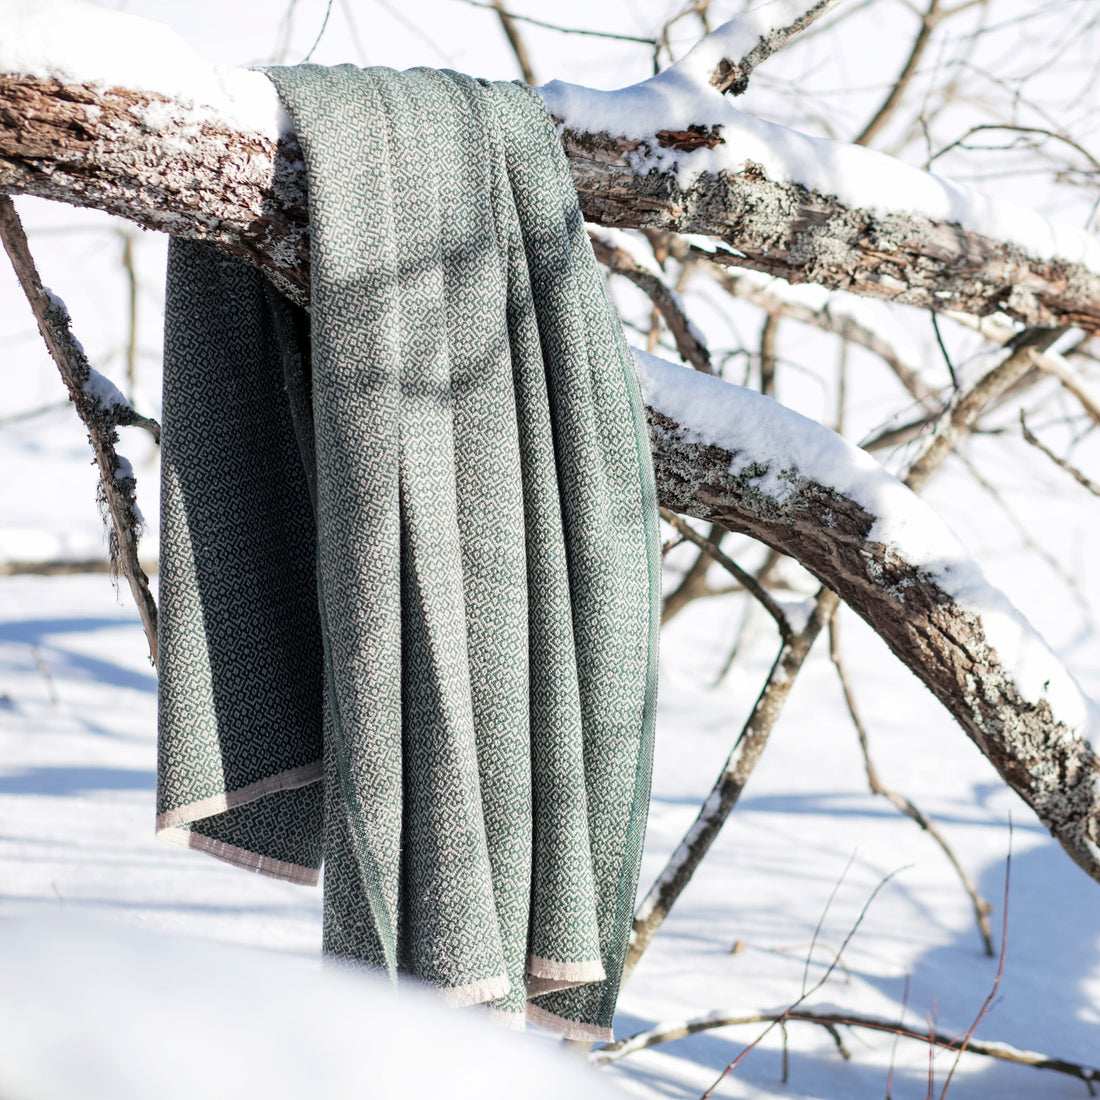 Win a KOLI blanket, from Finnish company Lapuan Kankurit